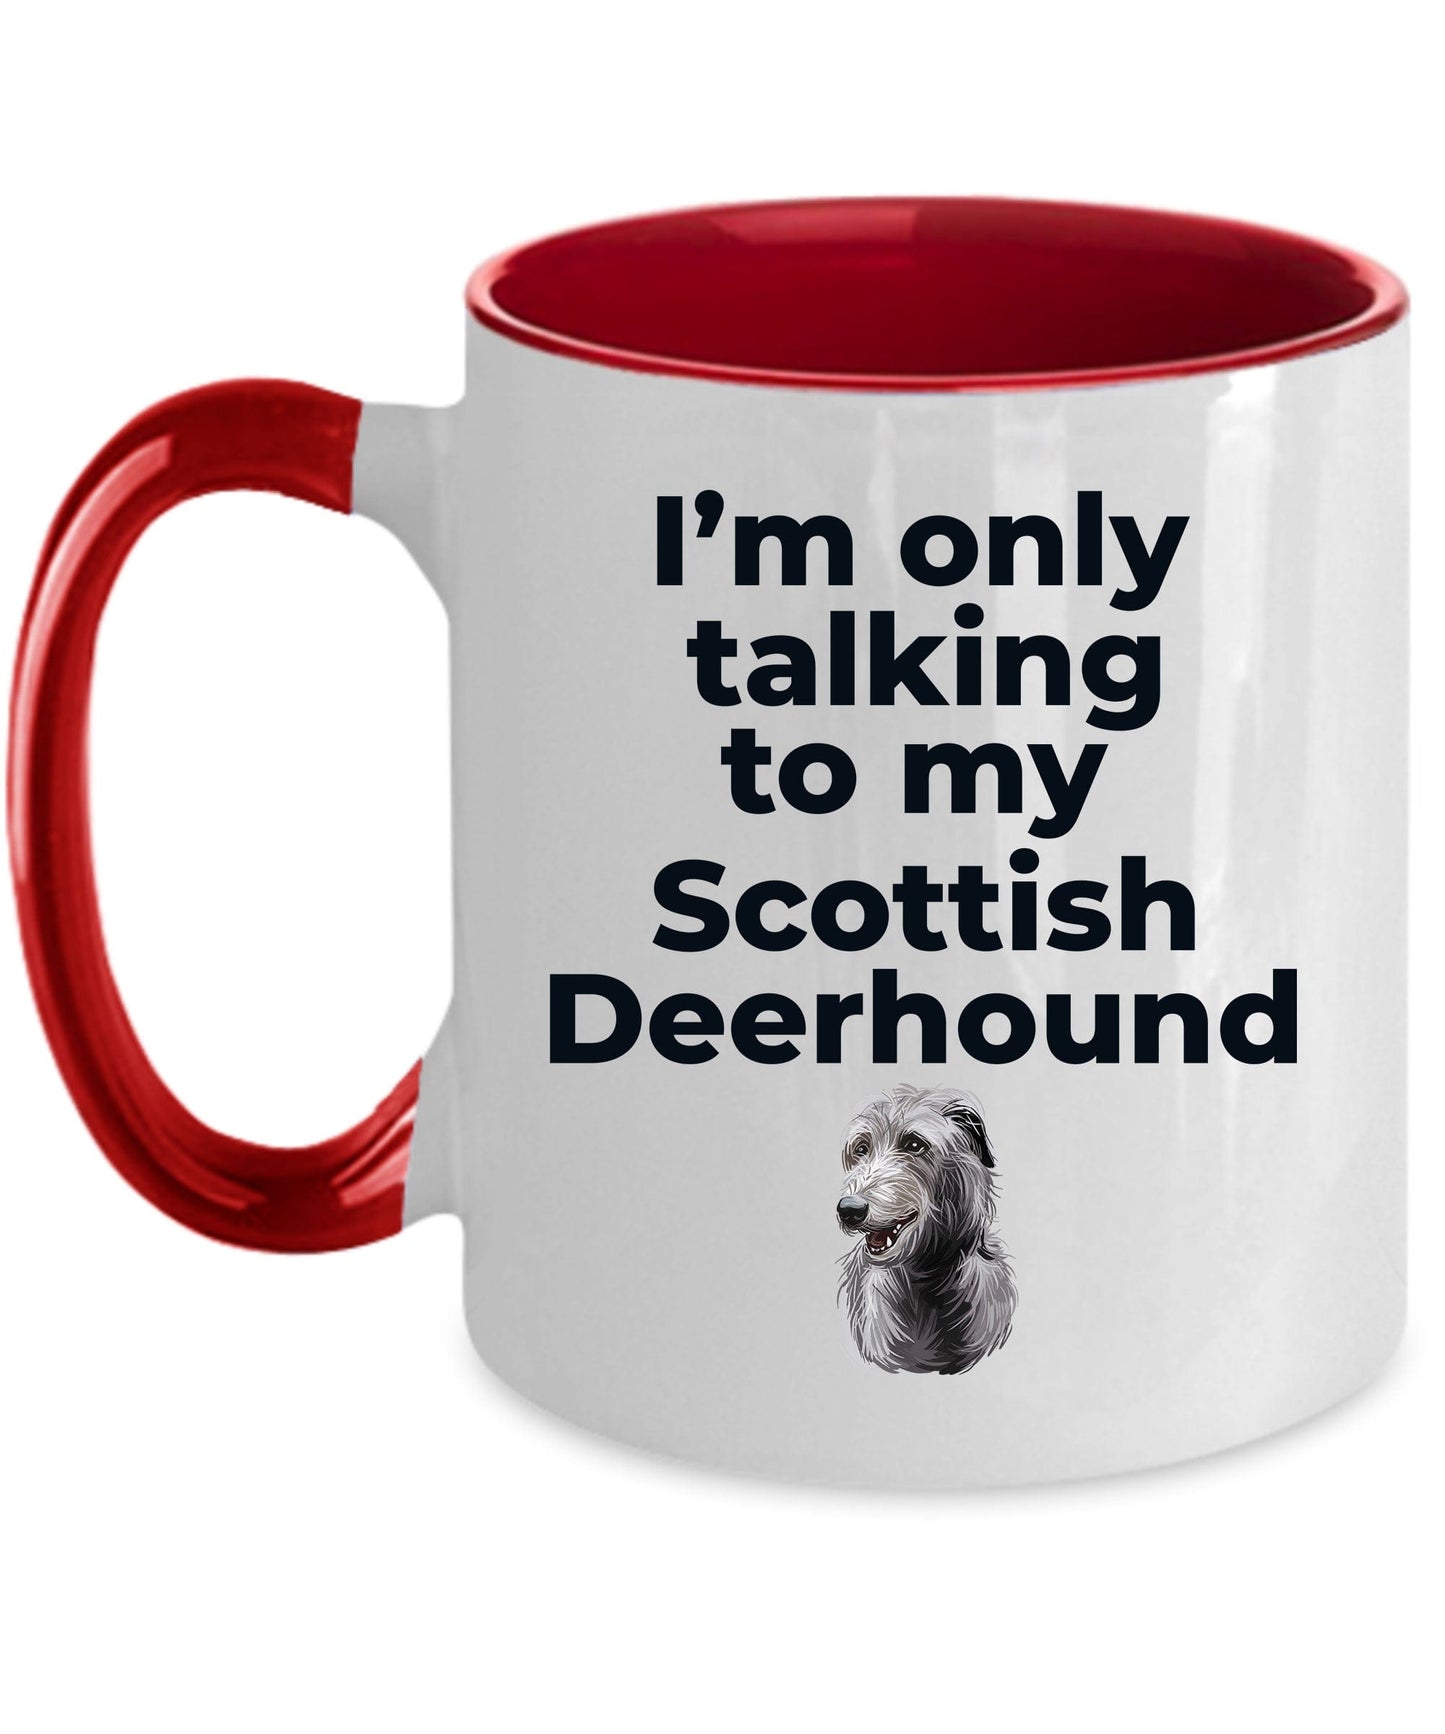 Scottish Deerhound Dog Funny Coffee Mug - I'm only talking to my Scottish Deerhound